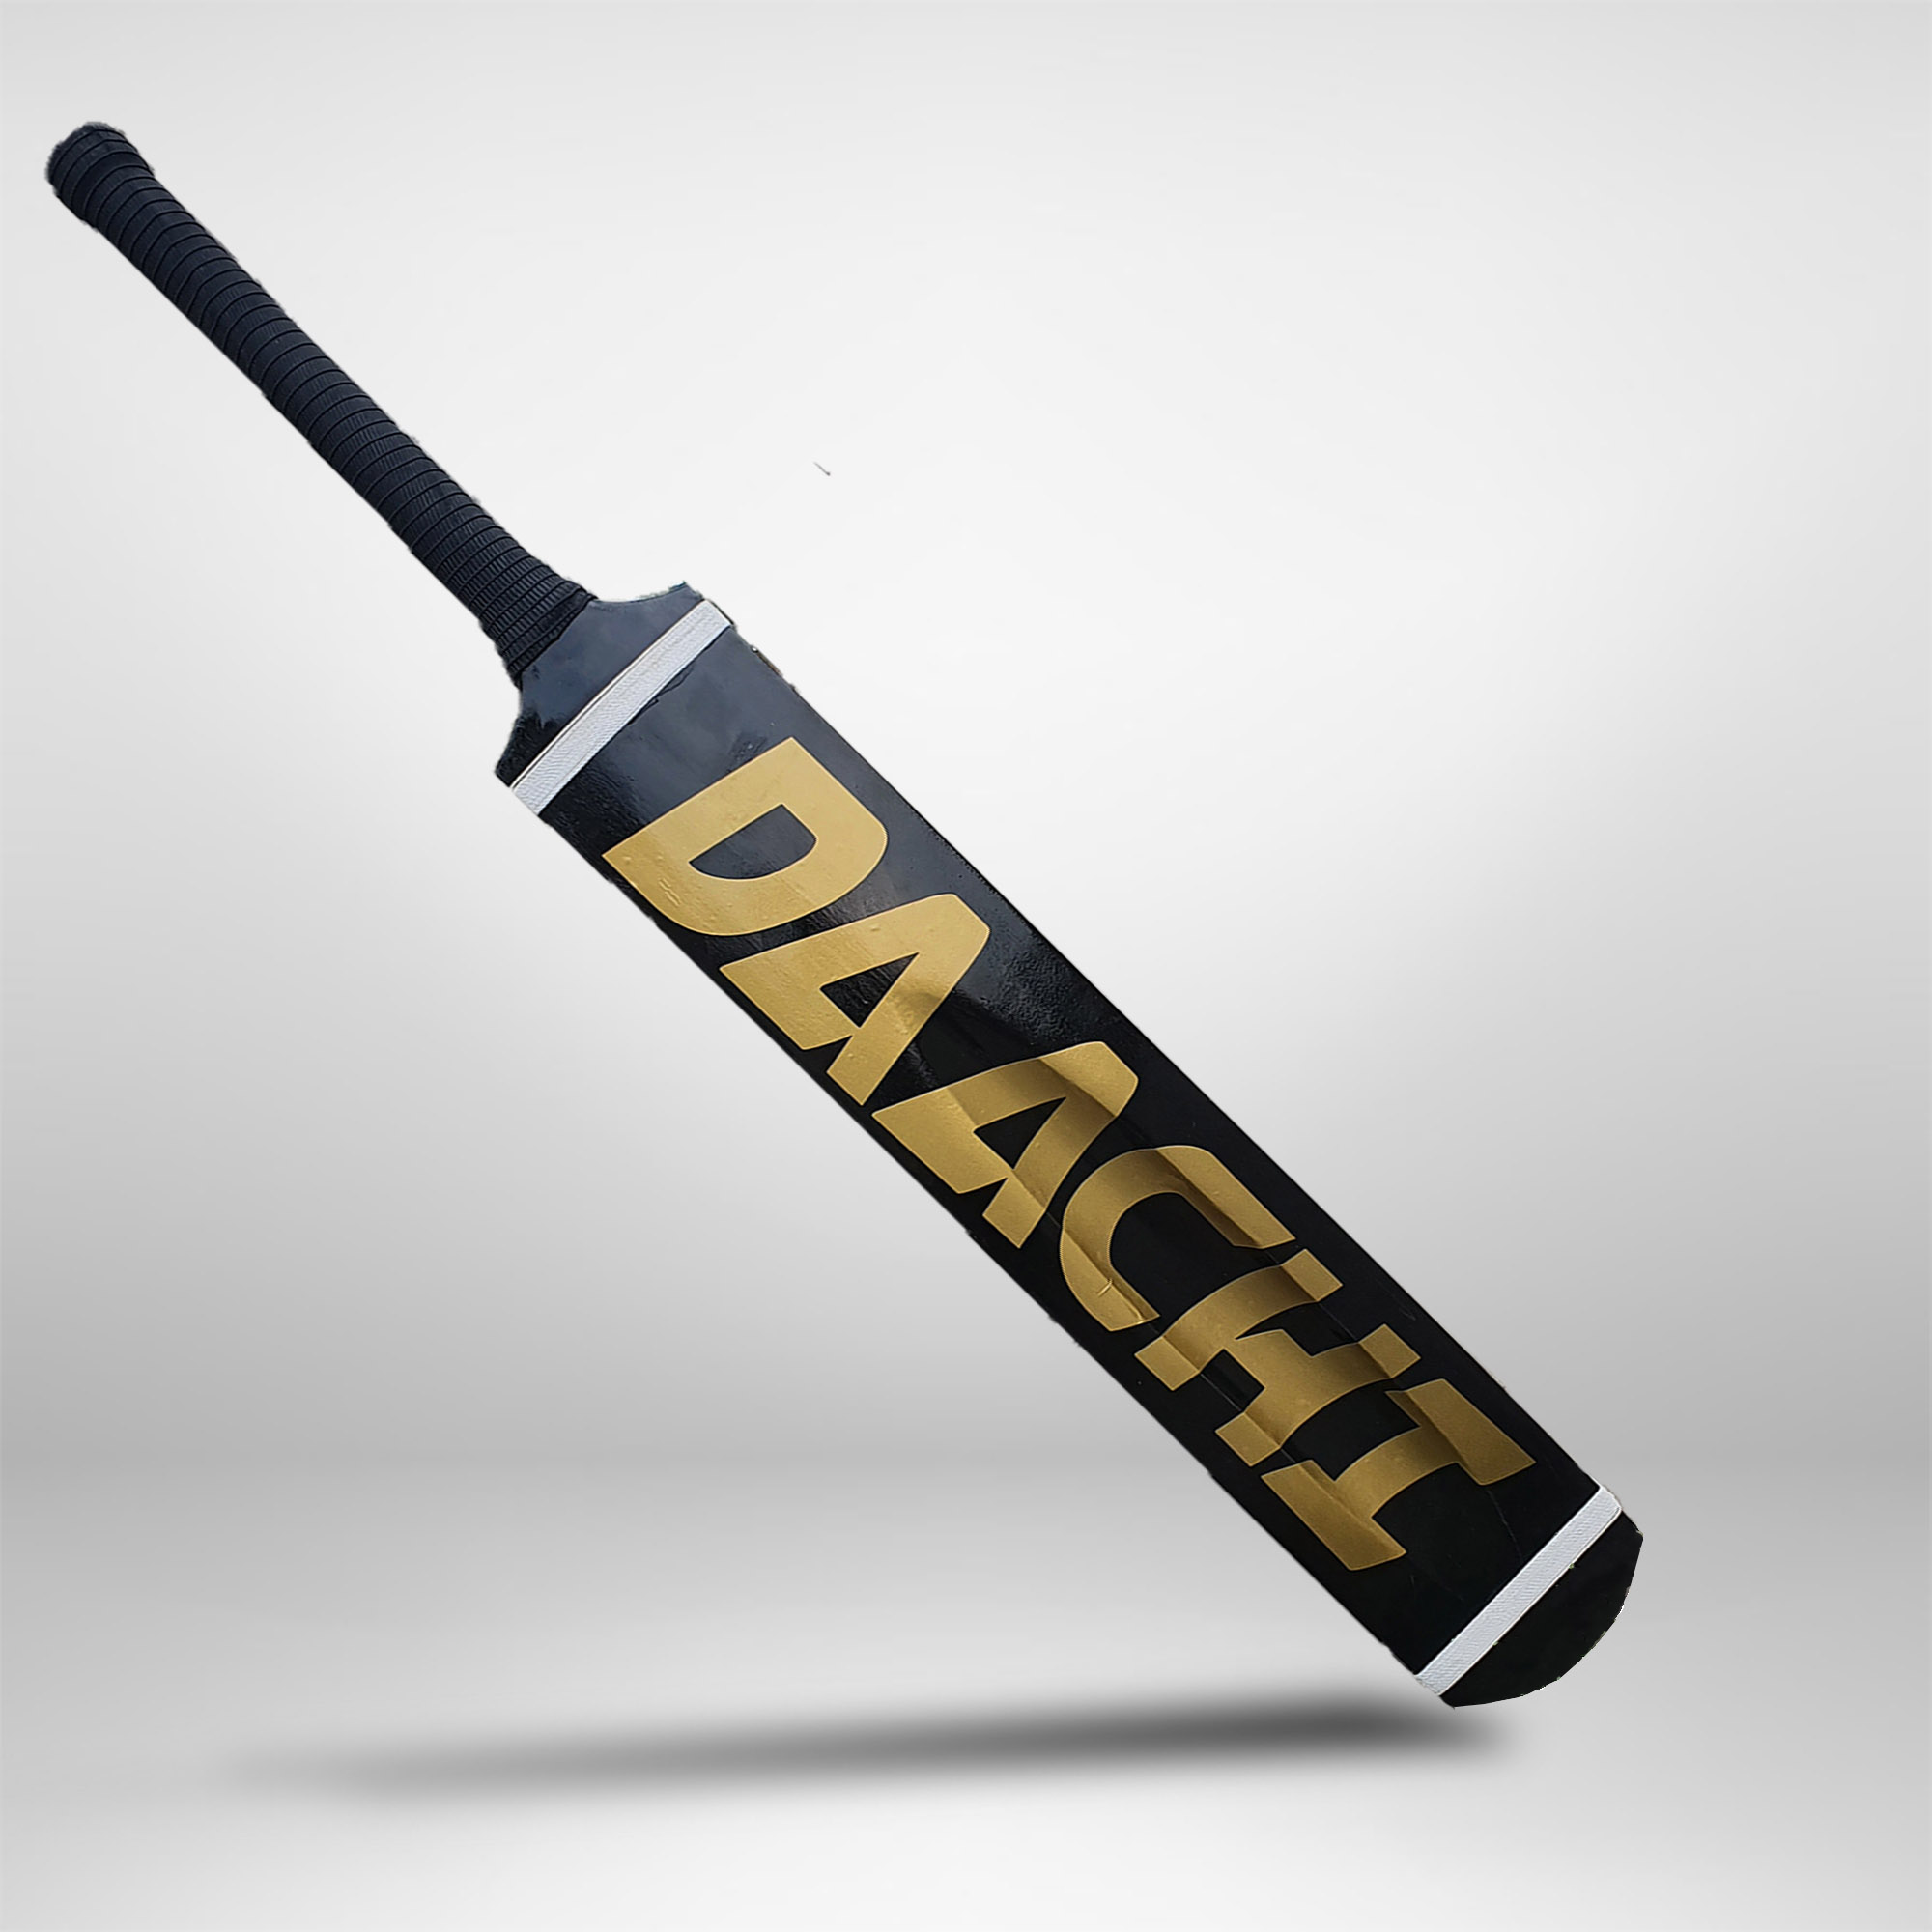 Daachi Tape Ball Cricket bat Tape Ball Bat Tennis Bat Soft Ball Bat Cricket Bat